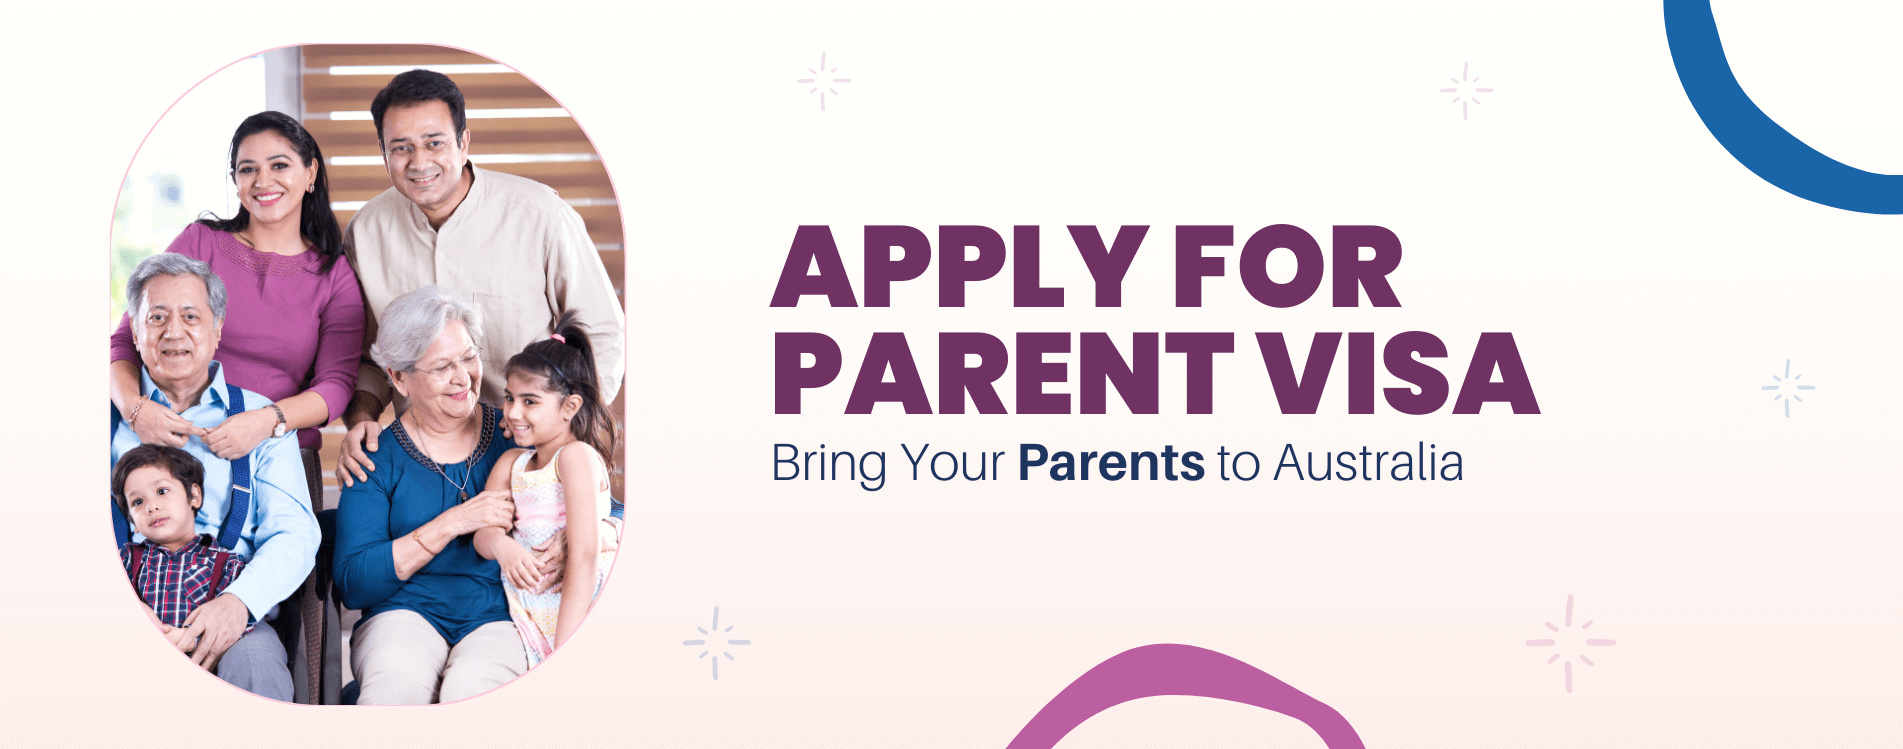 Apply for Parent Visa: Bring Your Parents to Australia